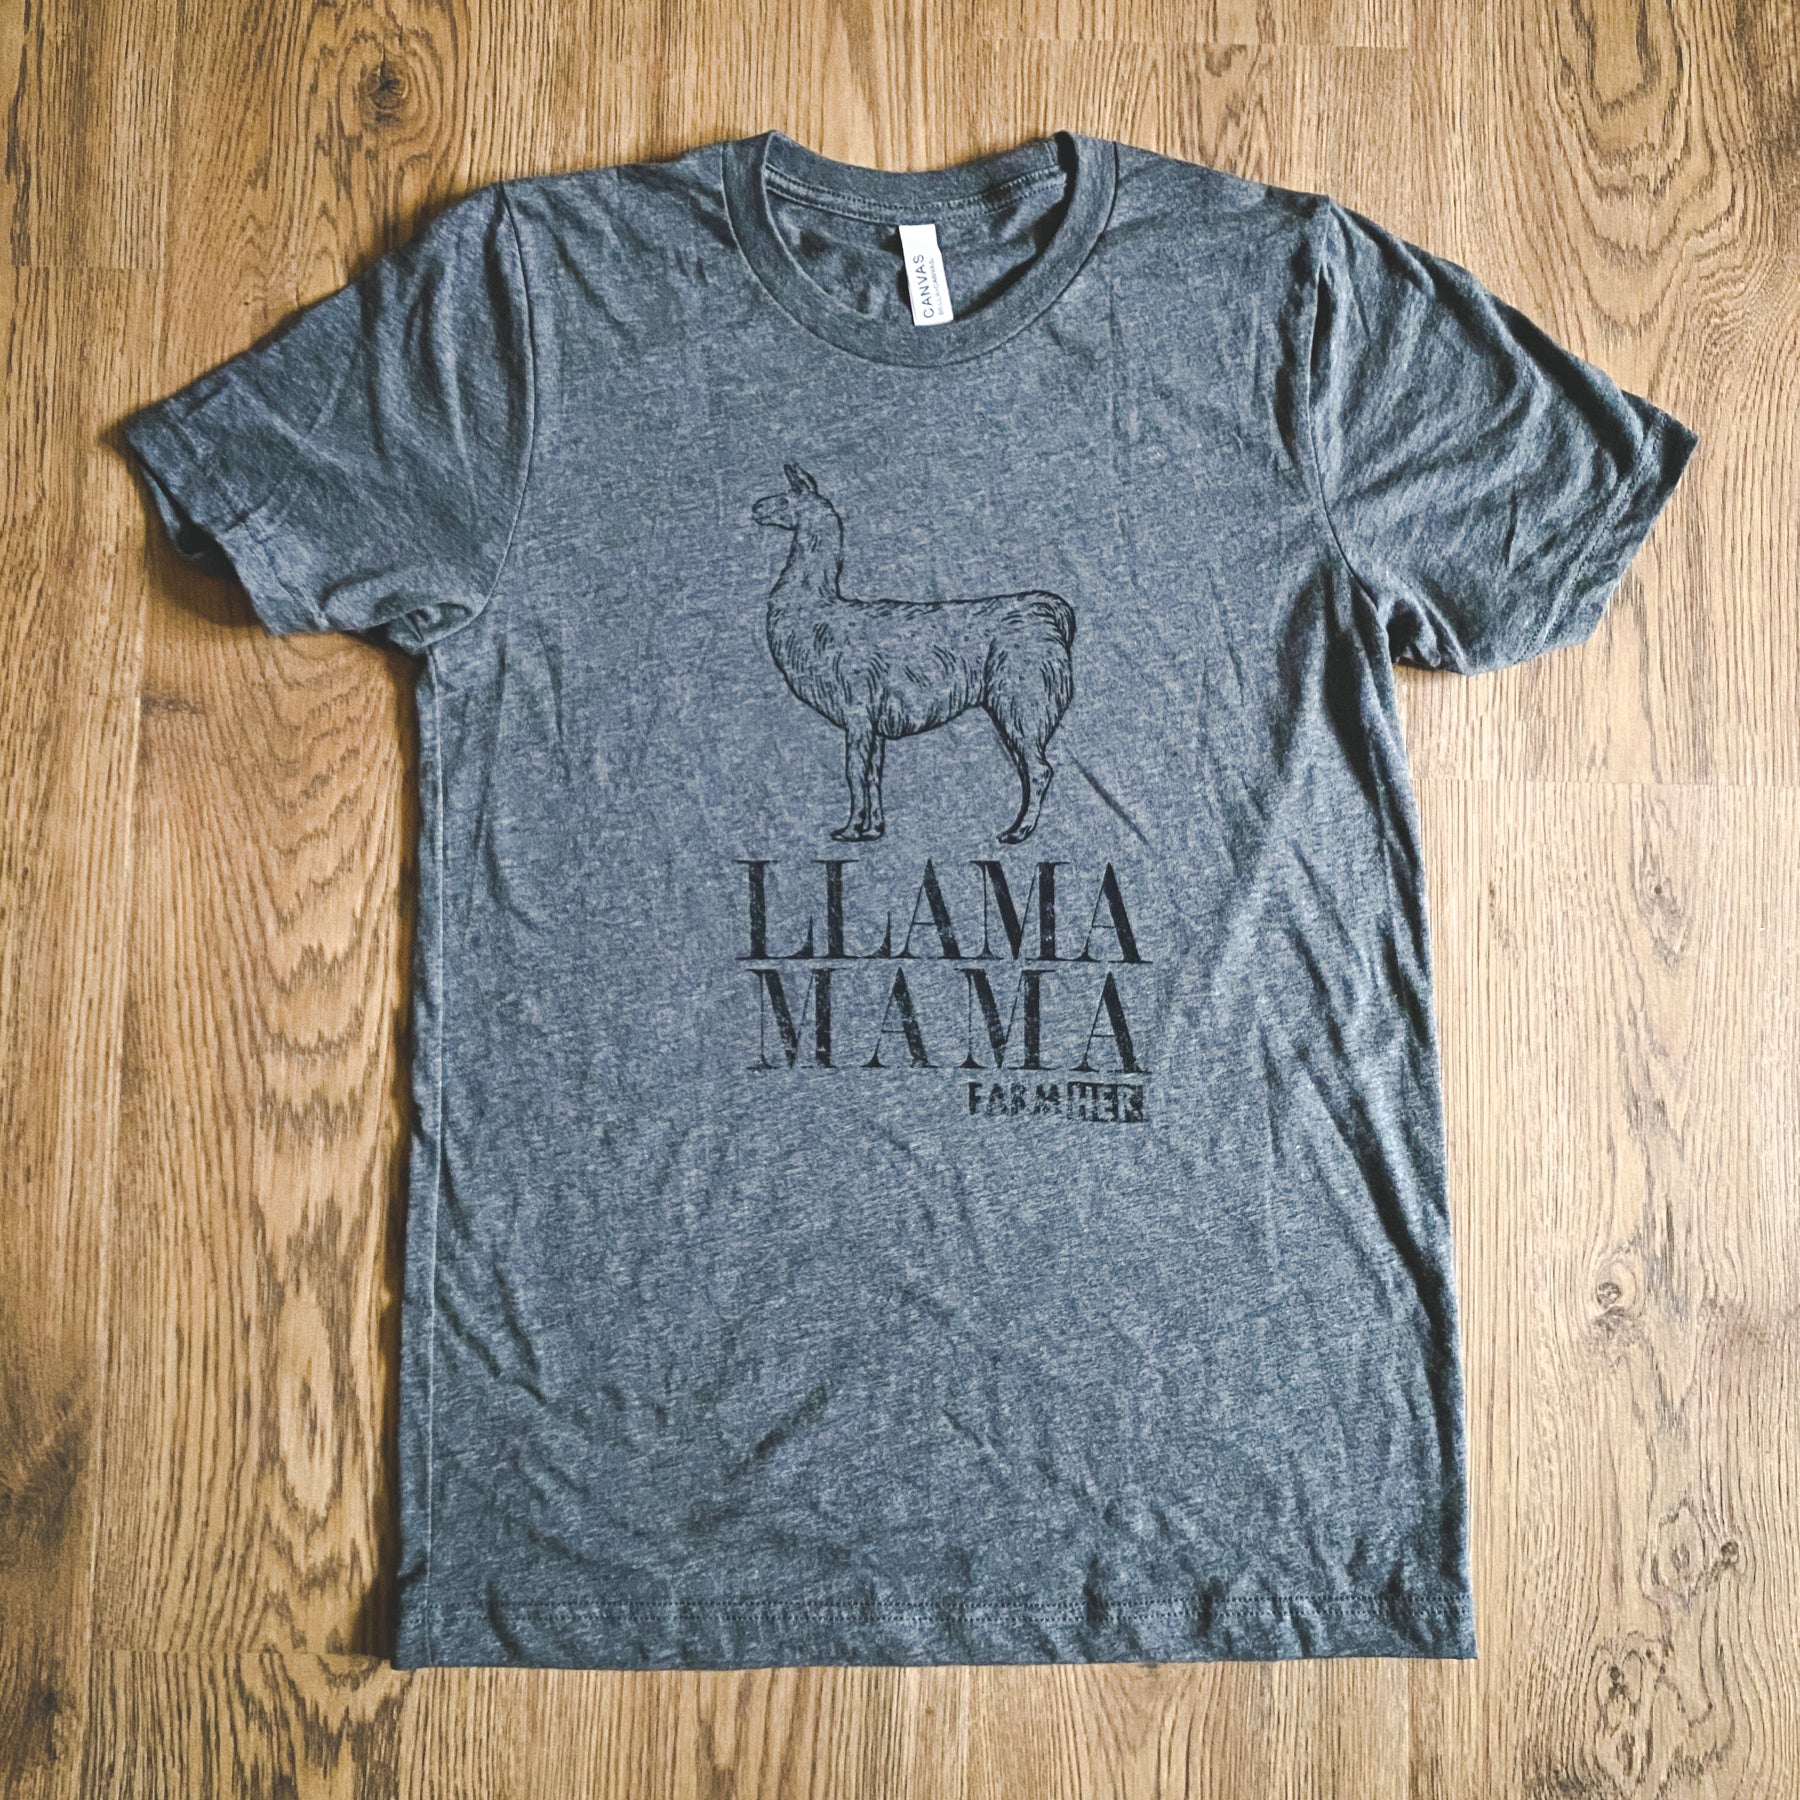 "Llama Mama" Grey FarmHer Graphic Tee